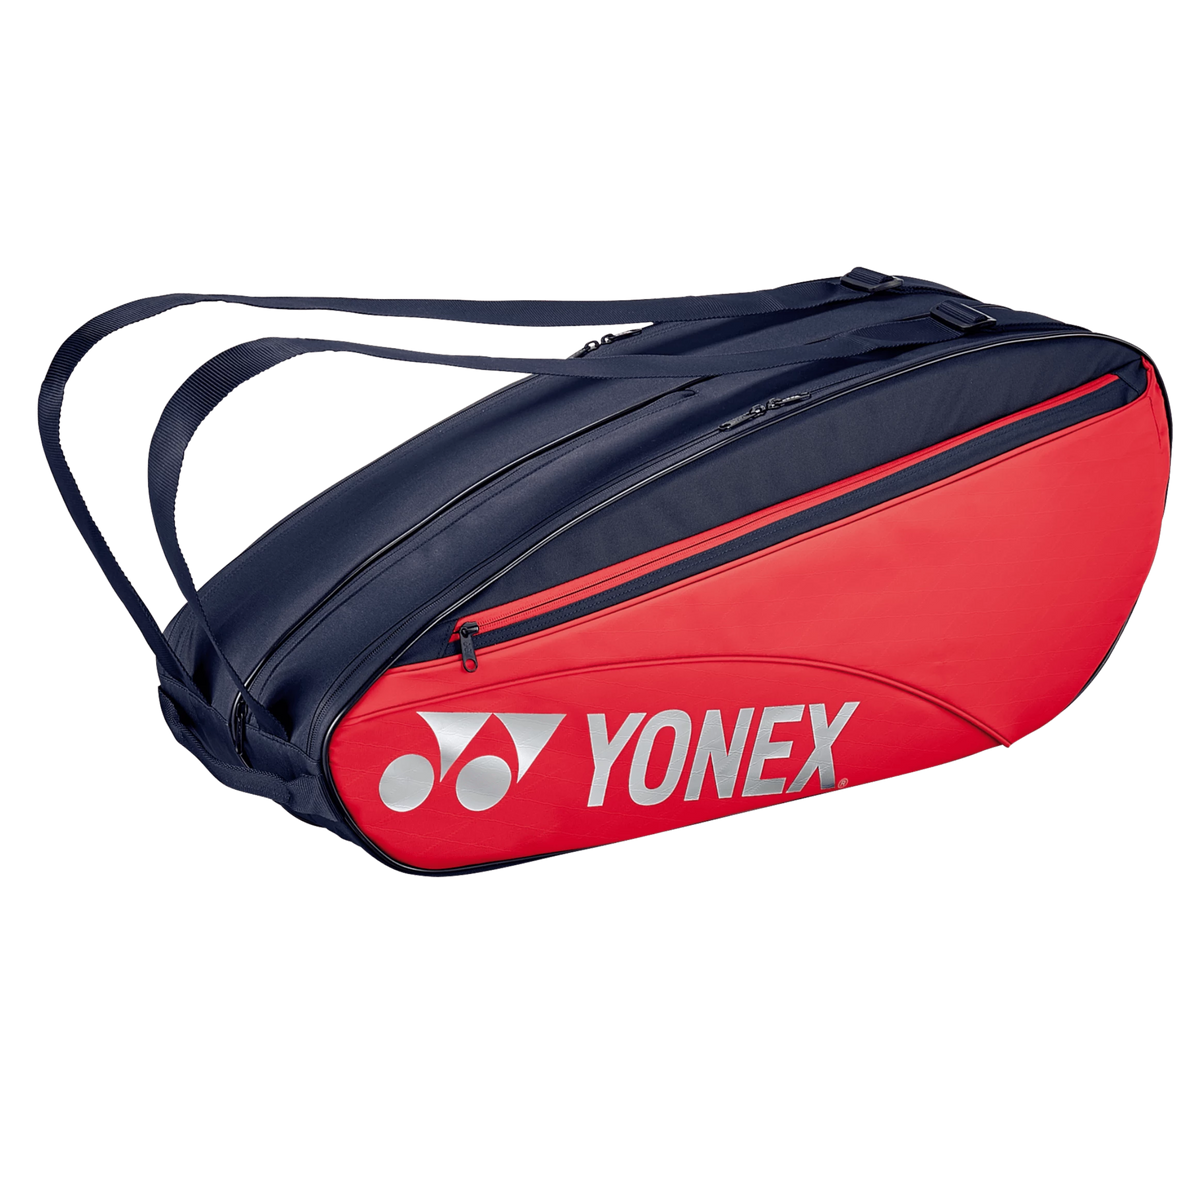 Yonex Racketbag 42326 rot